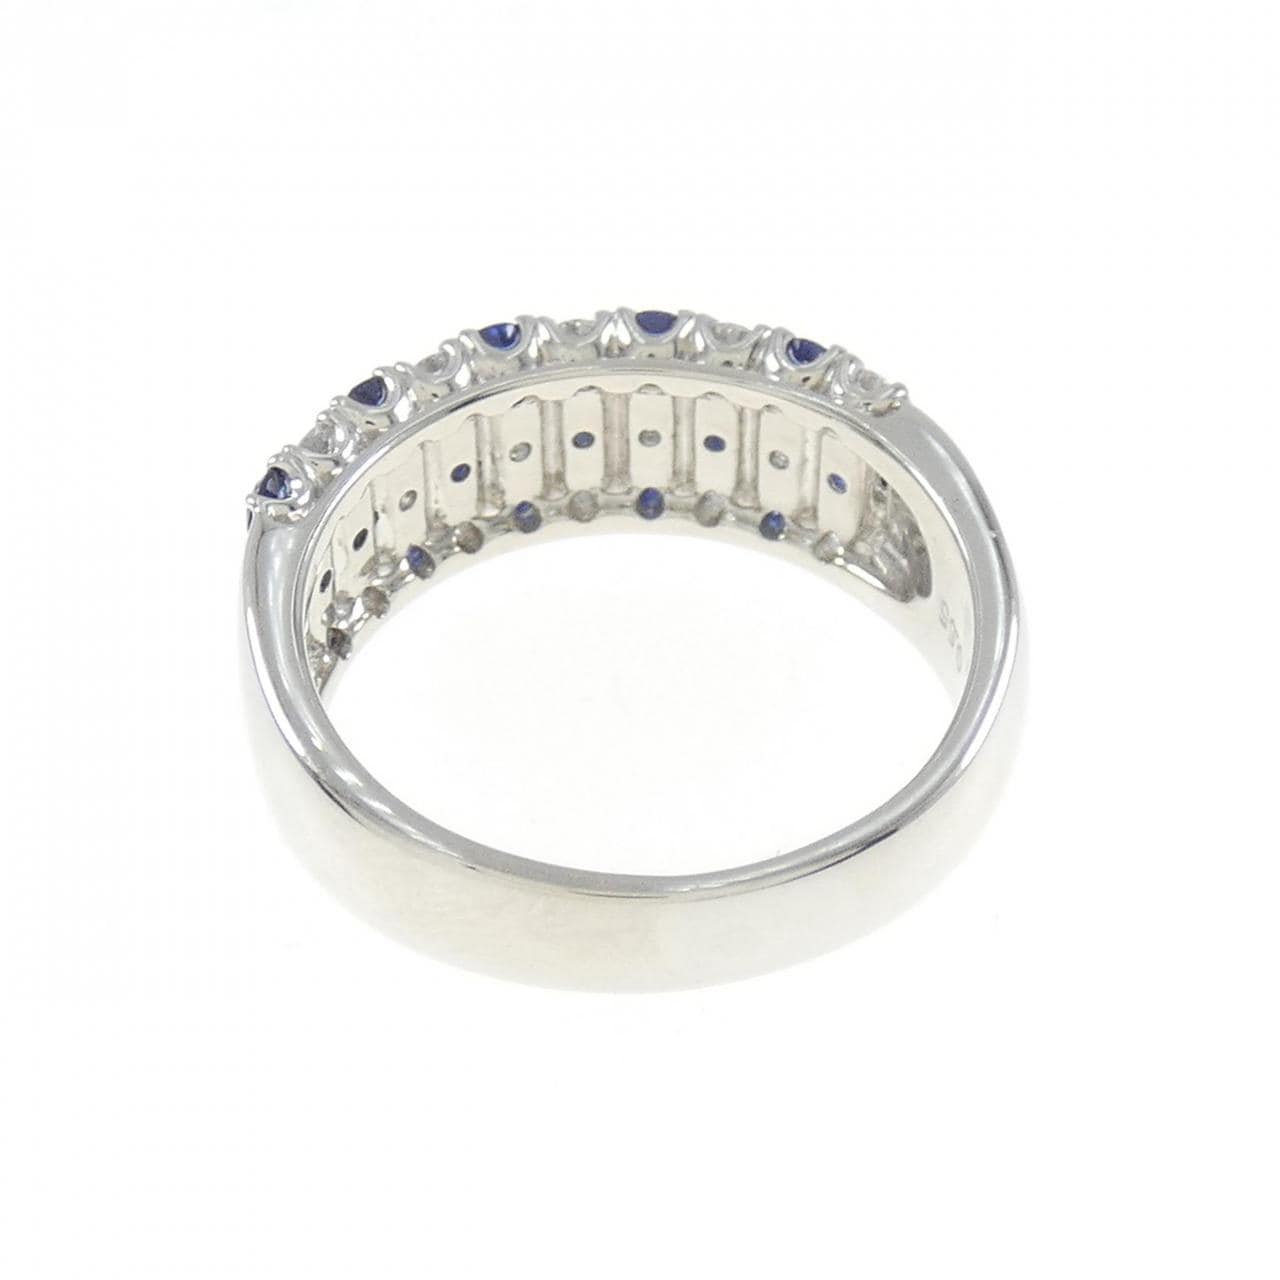 Tasaki sapphire ring